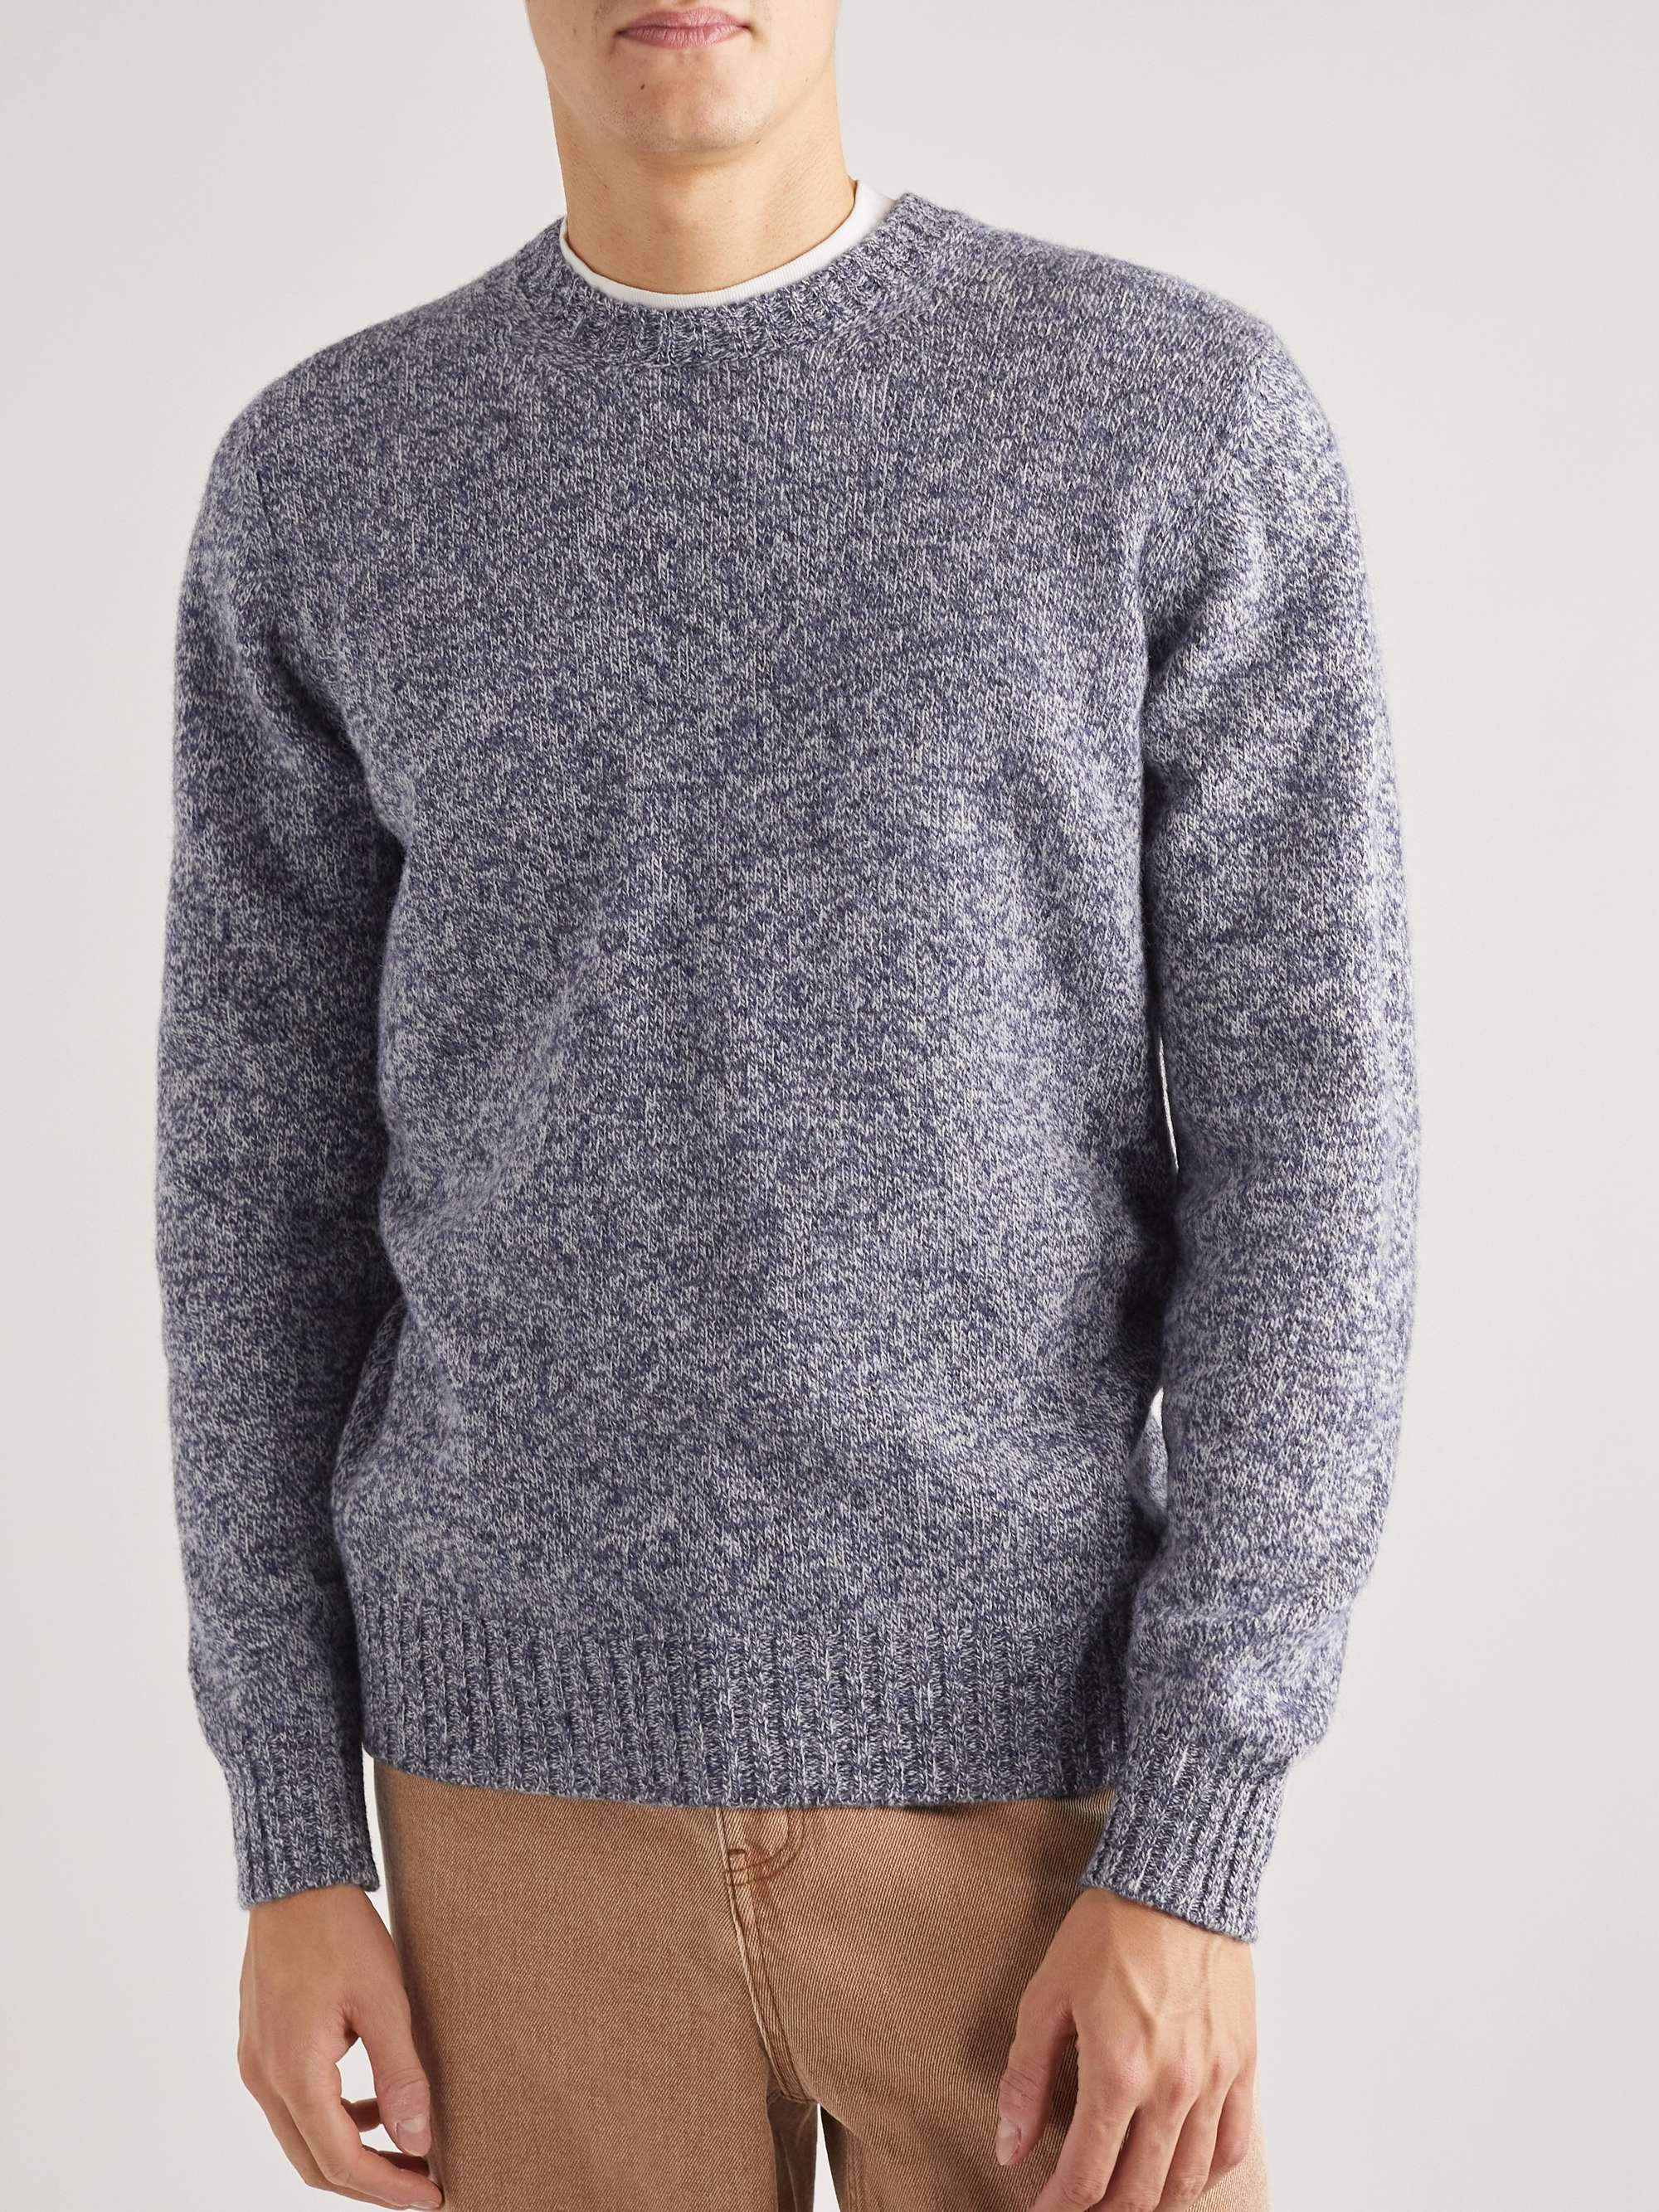 HARTFORD Wool Sweater for Men | MR PORTER